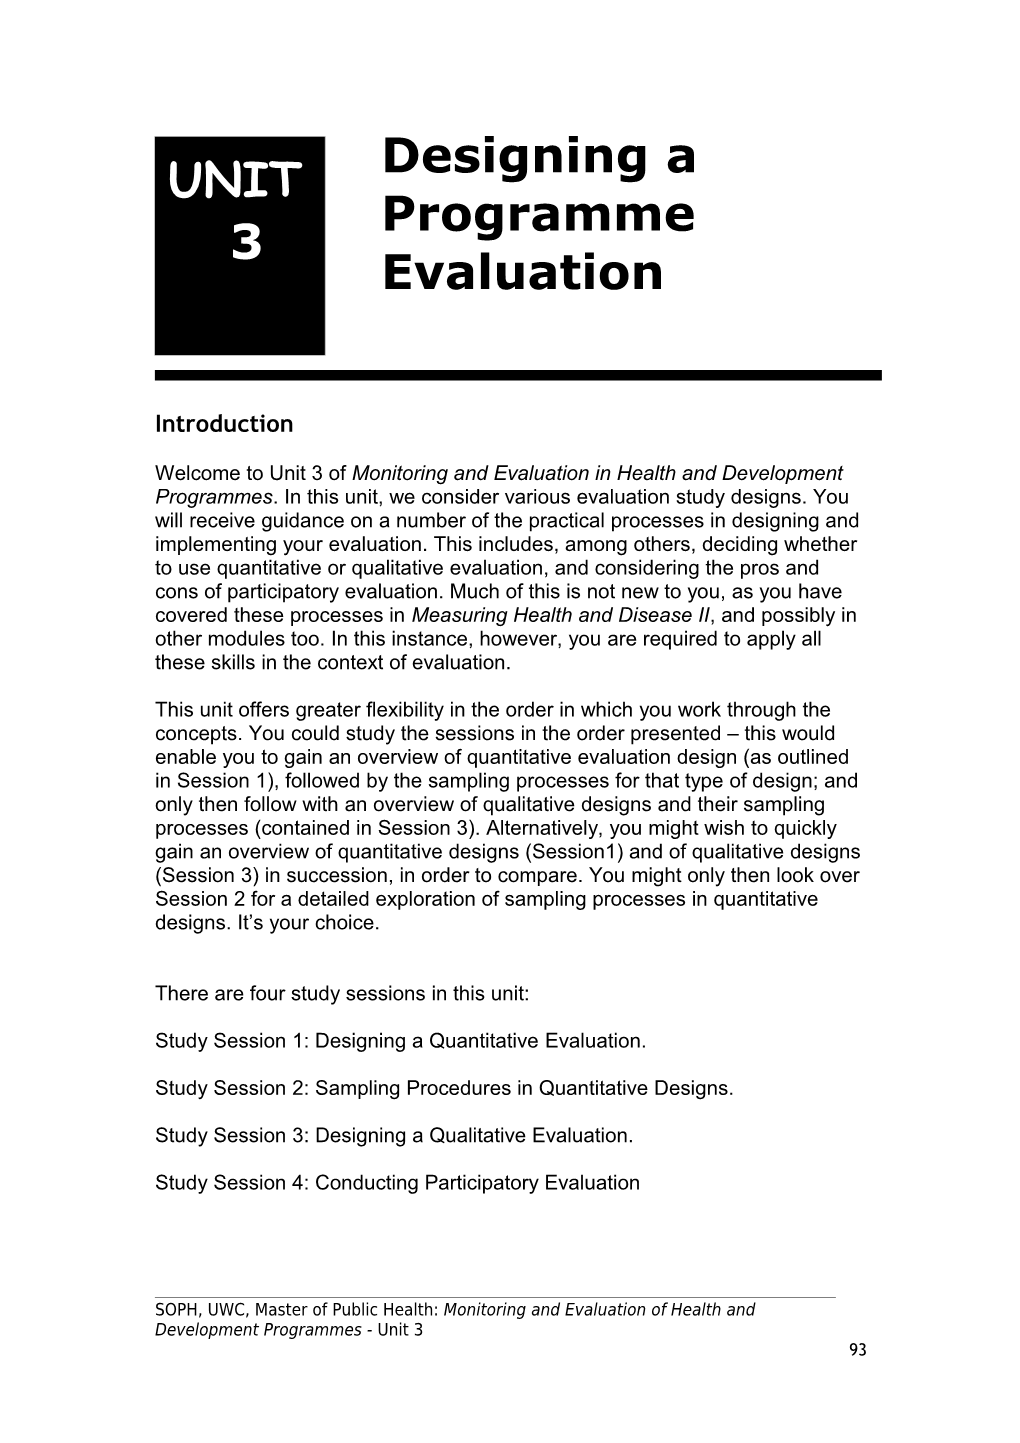 Designing a Programme Evaluation